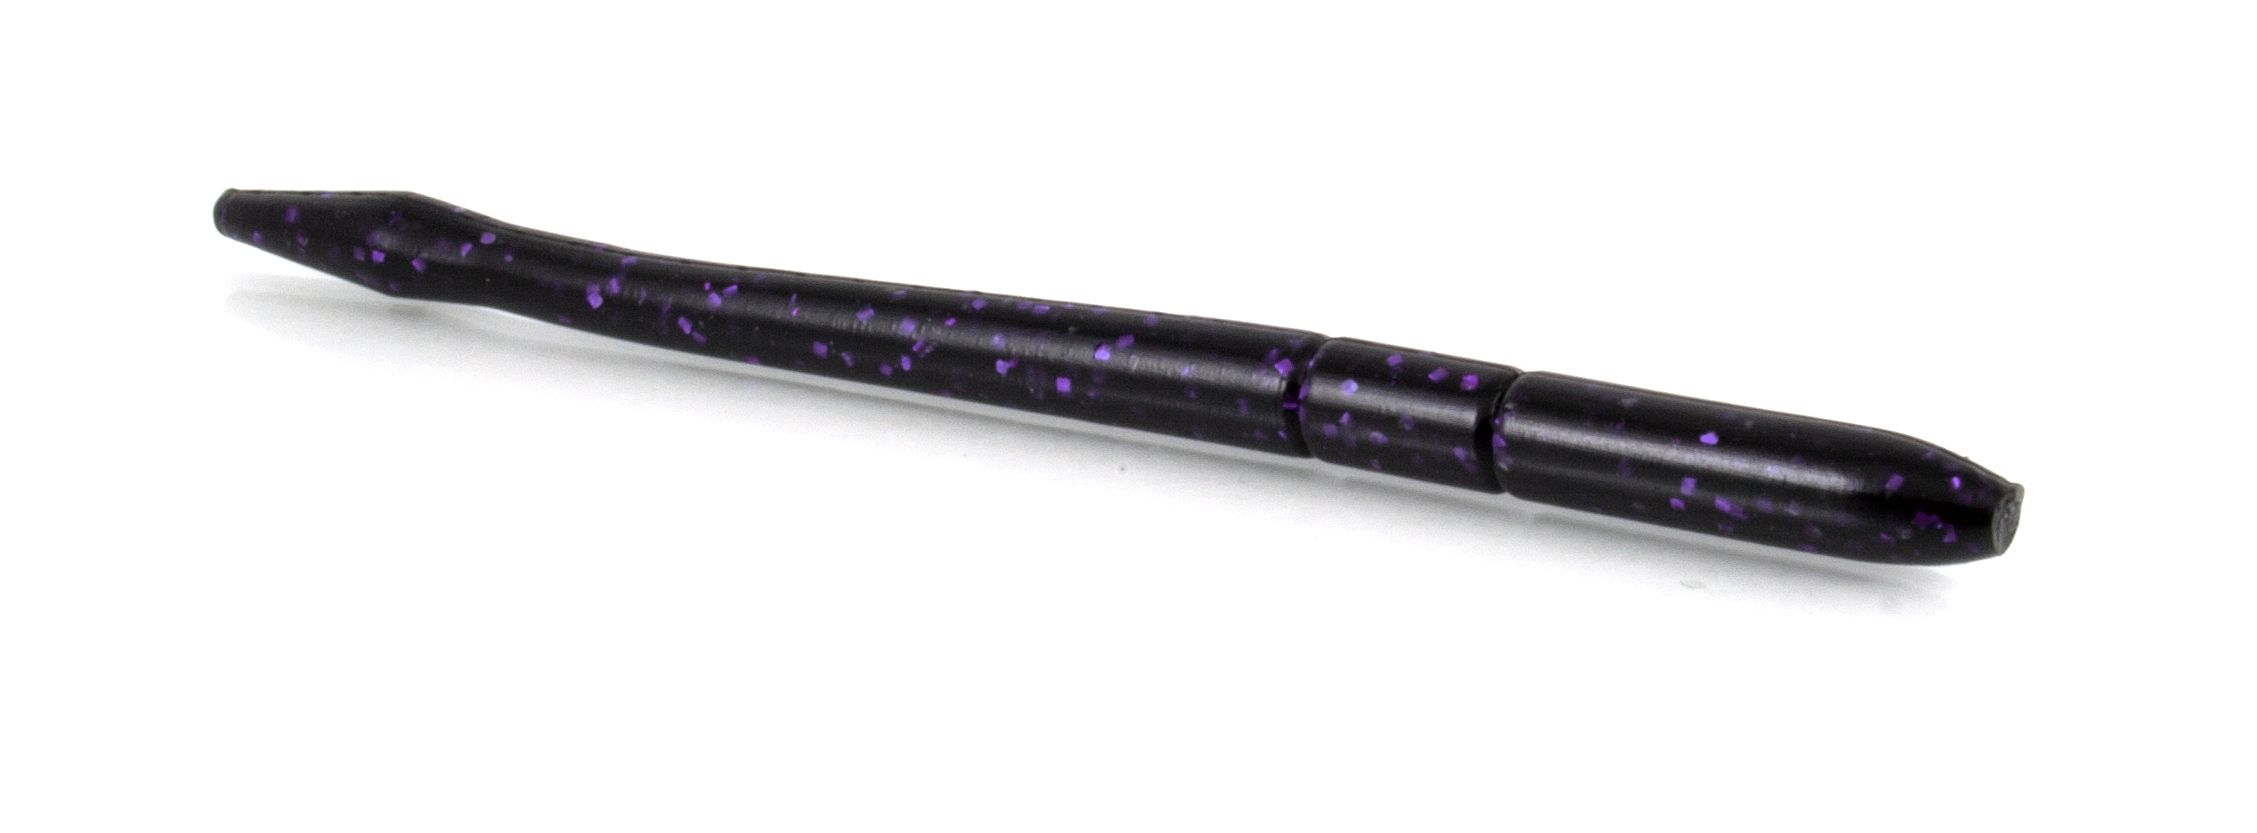 Softbait Black Flagg FNSS Worm M 5.95" col. #045F Black Purple Flk